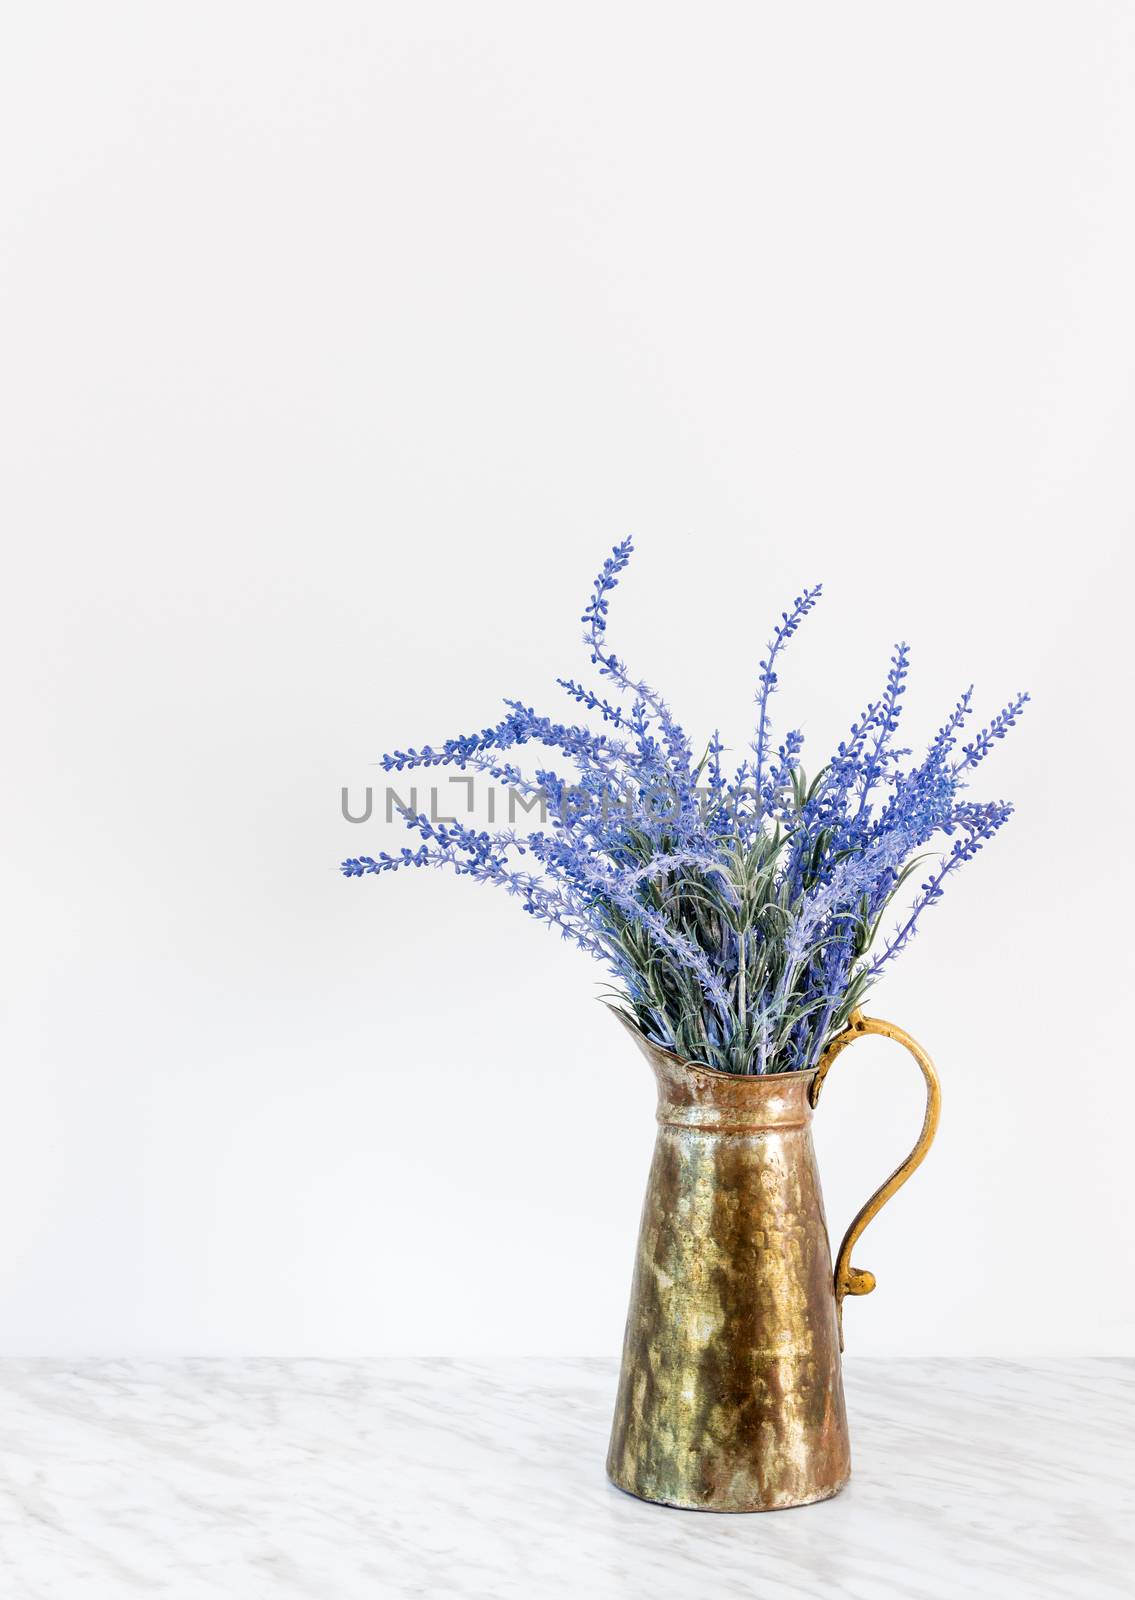 Blue lavender in antique metal jar by anikasalsera